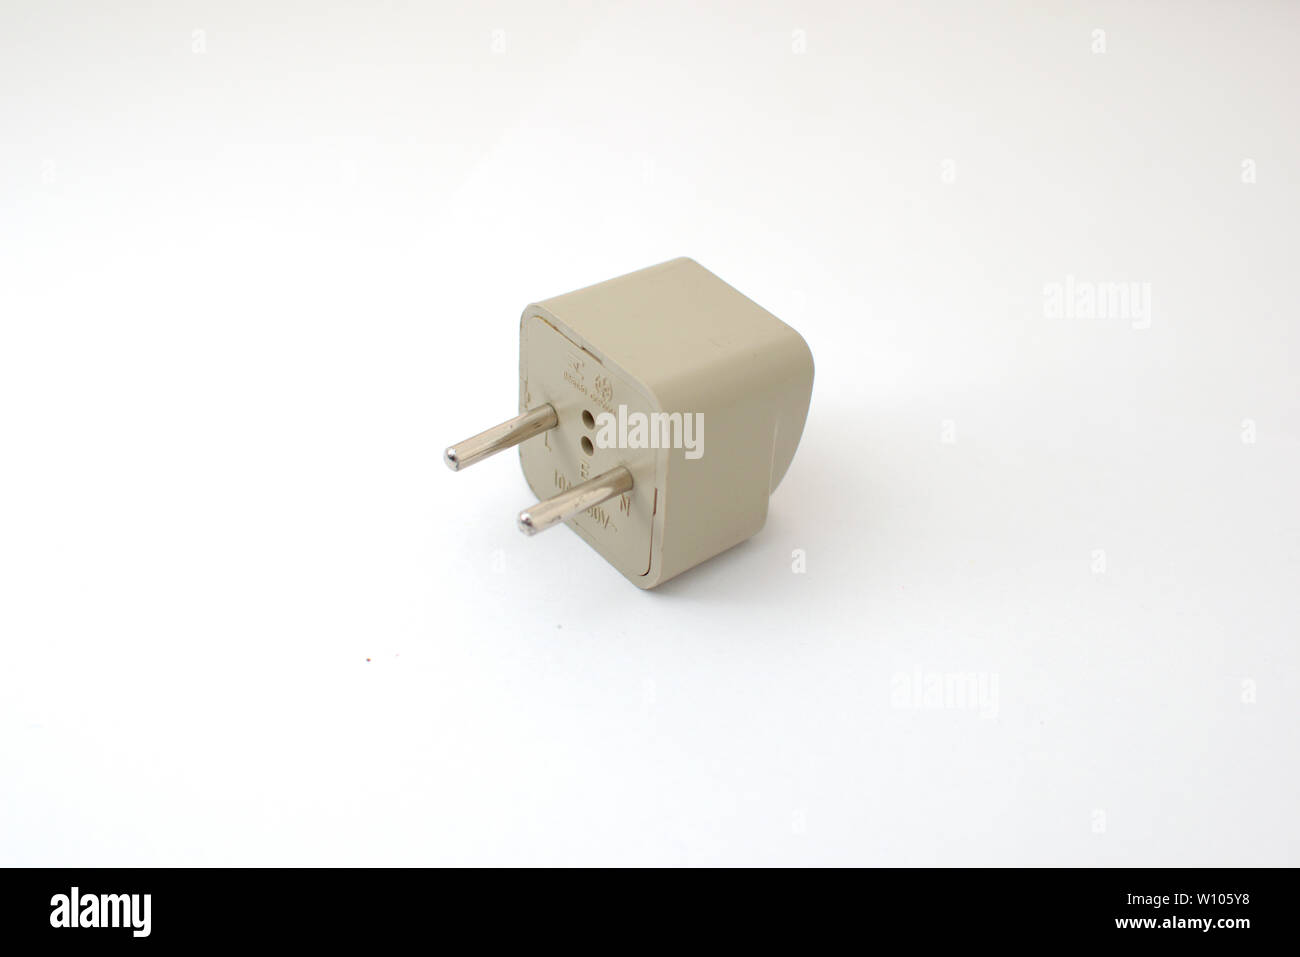 Studio shot of a two-pin Type C Europlug adapter power plug Stock Photo